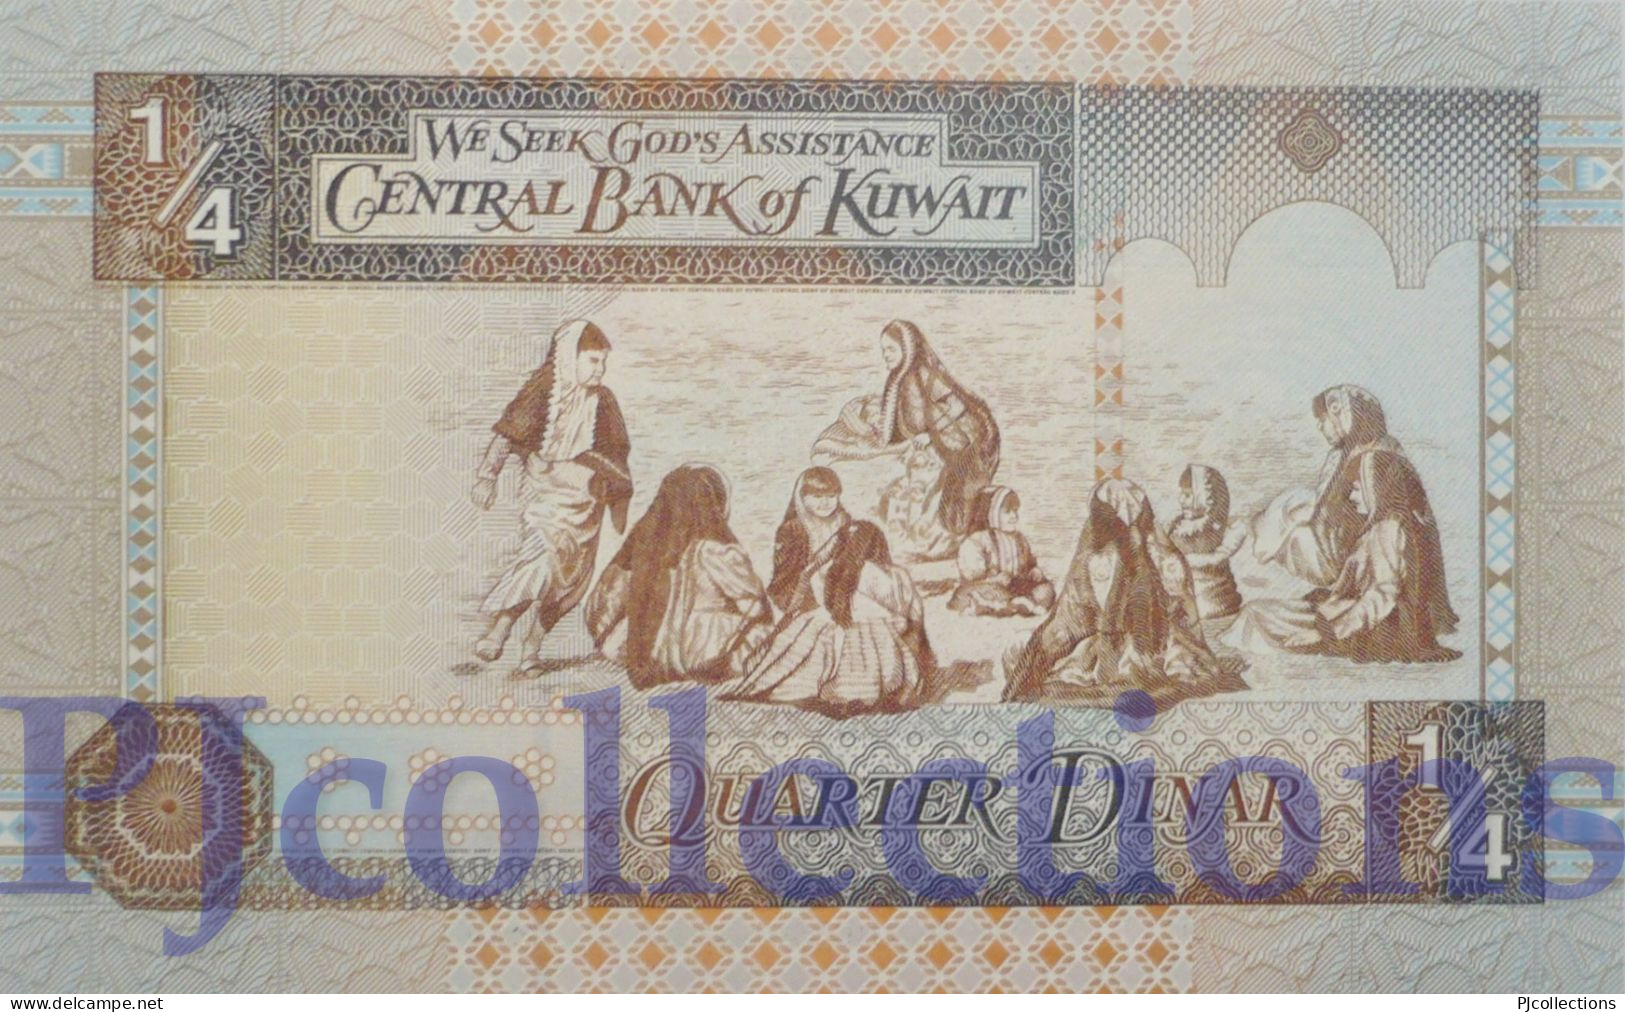 KUWAIT 1/4 DINAR 1994 PICK 23a UNC - Kuwait